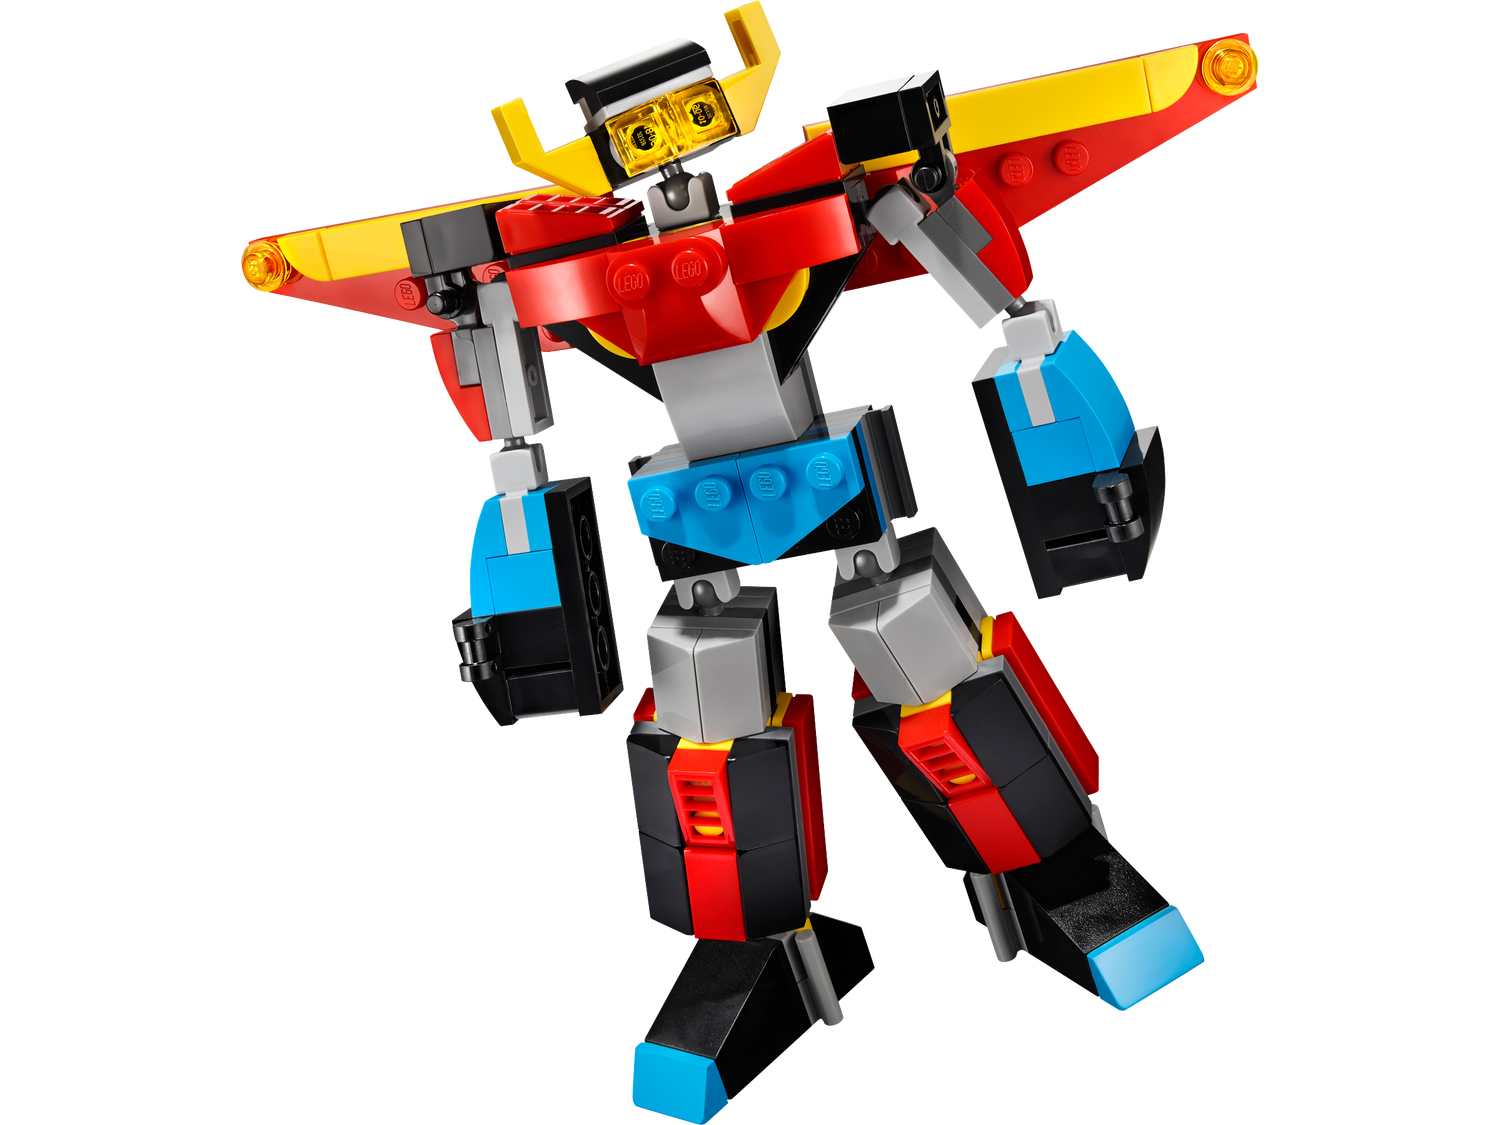 Super Robot 31124 | Creator 3-in-1 | Buy the LEGO® Shop US